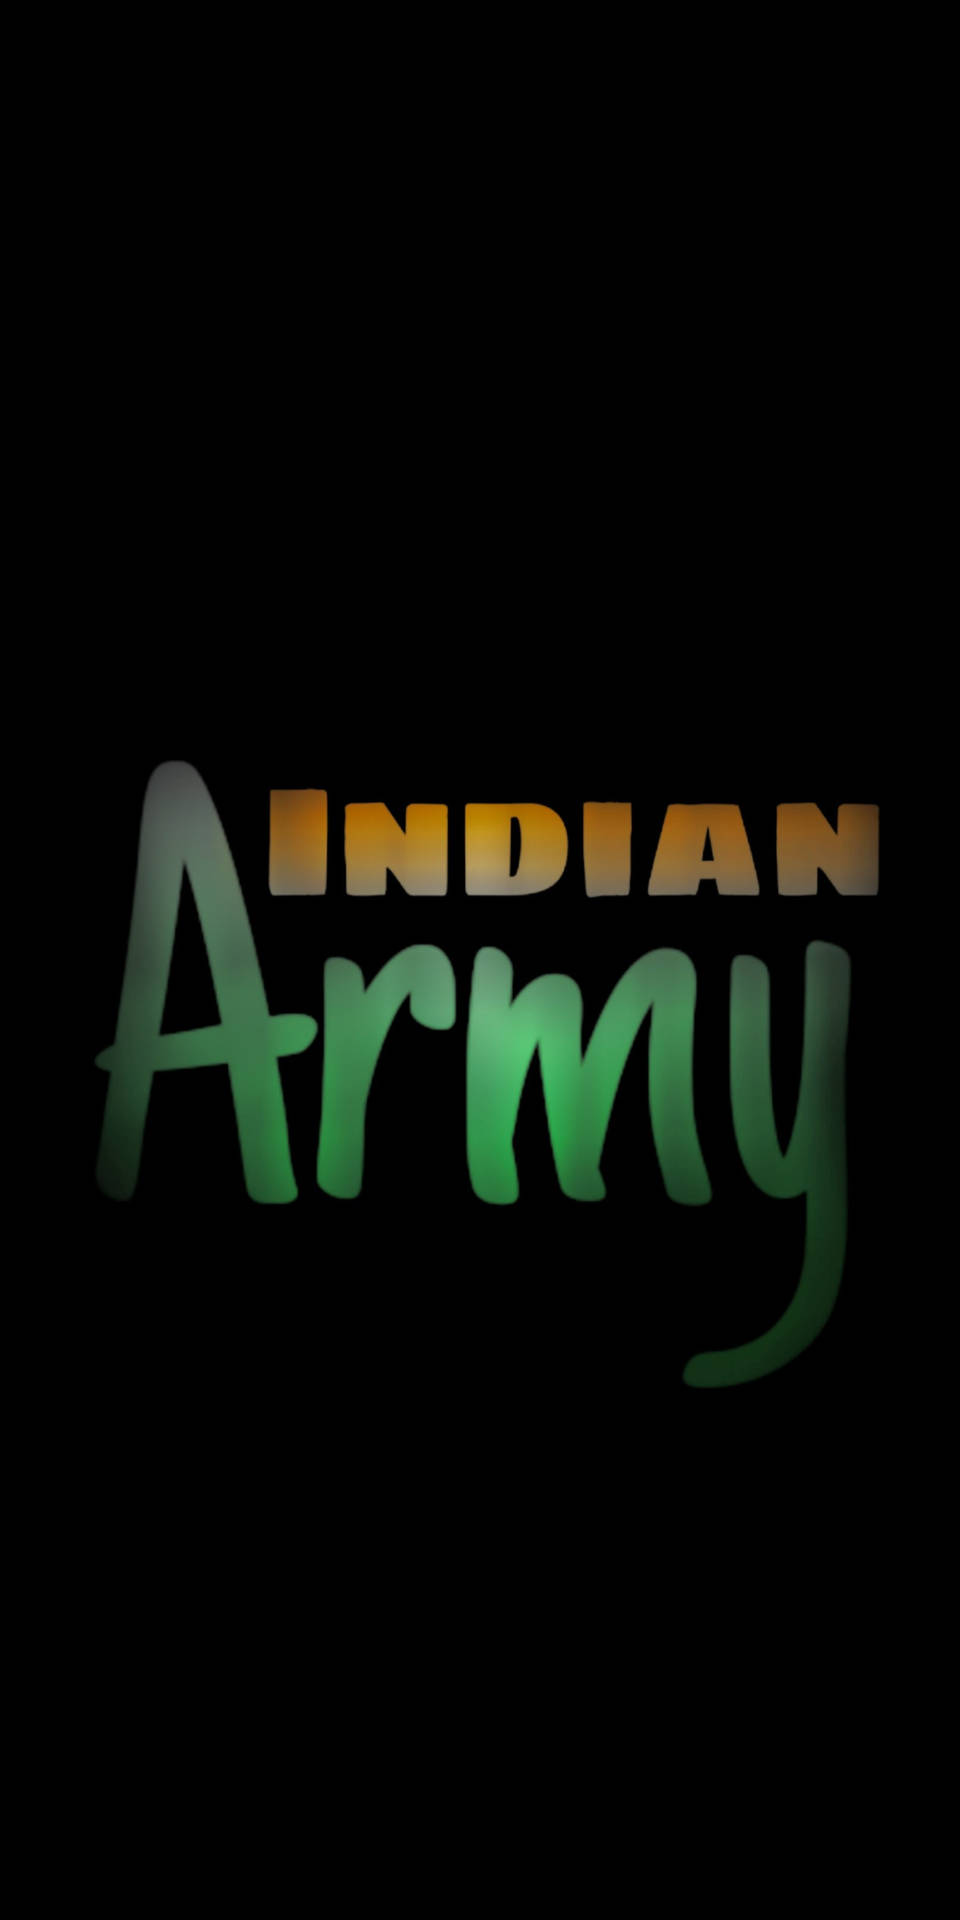 Indian Army Logo Text Art Wallpaper